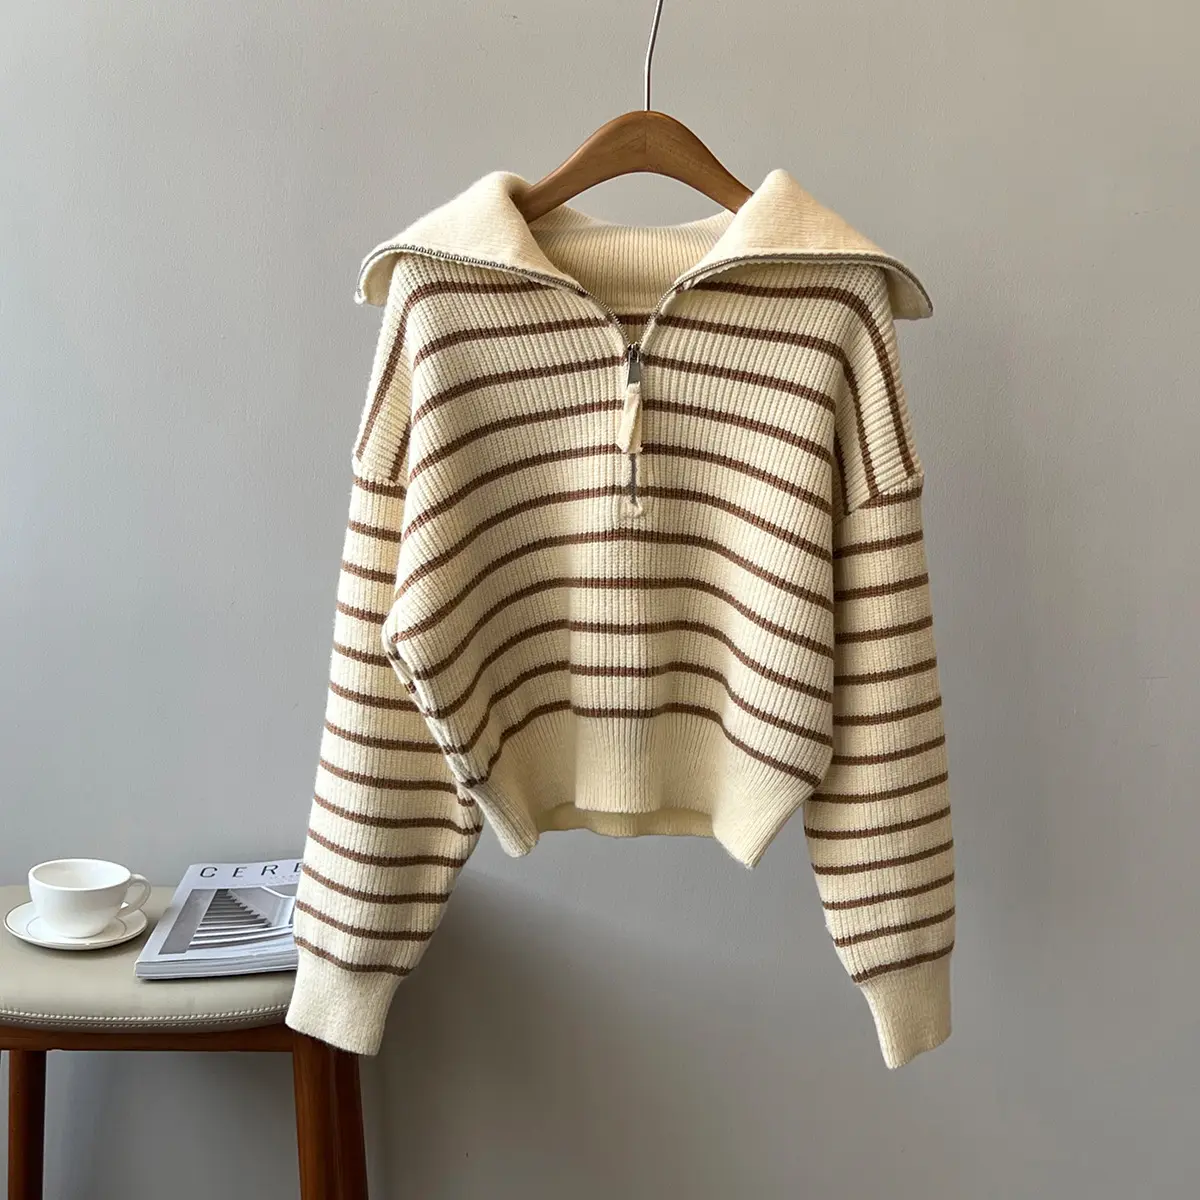 Kingsu-Stil übergroße gestreifte Strickwaren langärmelige Pullover Mode Halbreißverschluss-Sweater OEM ODM lässig Damen Vintage